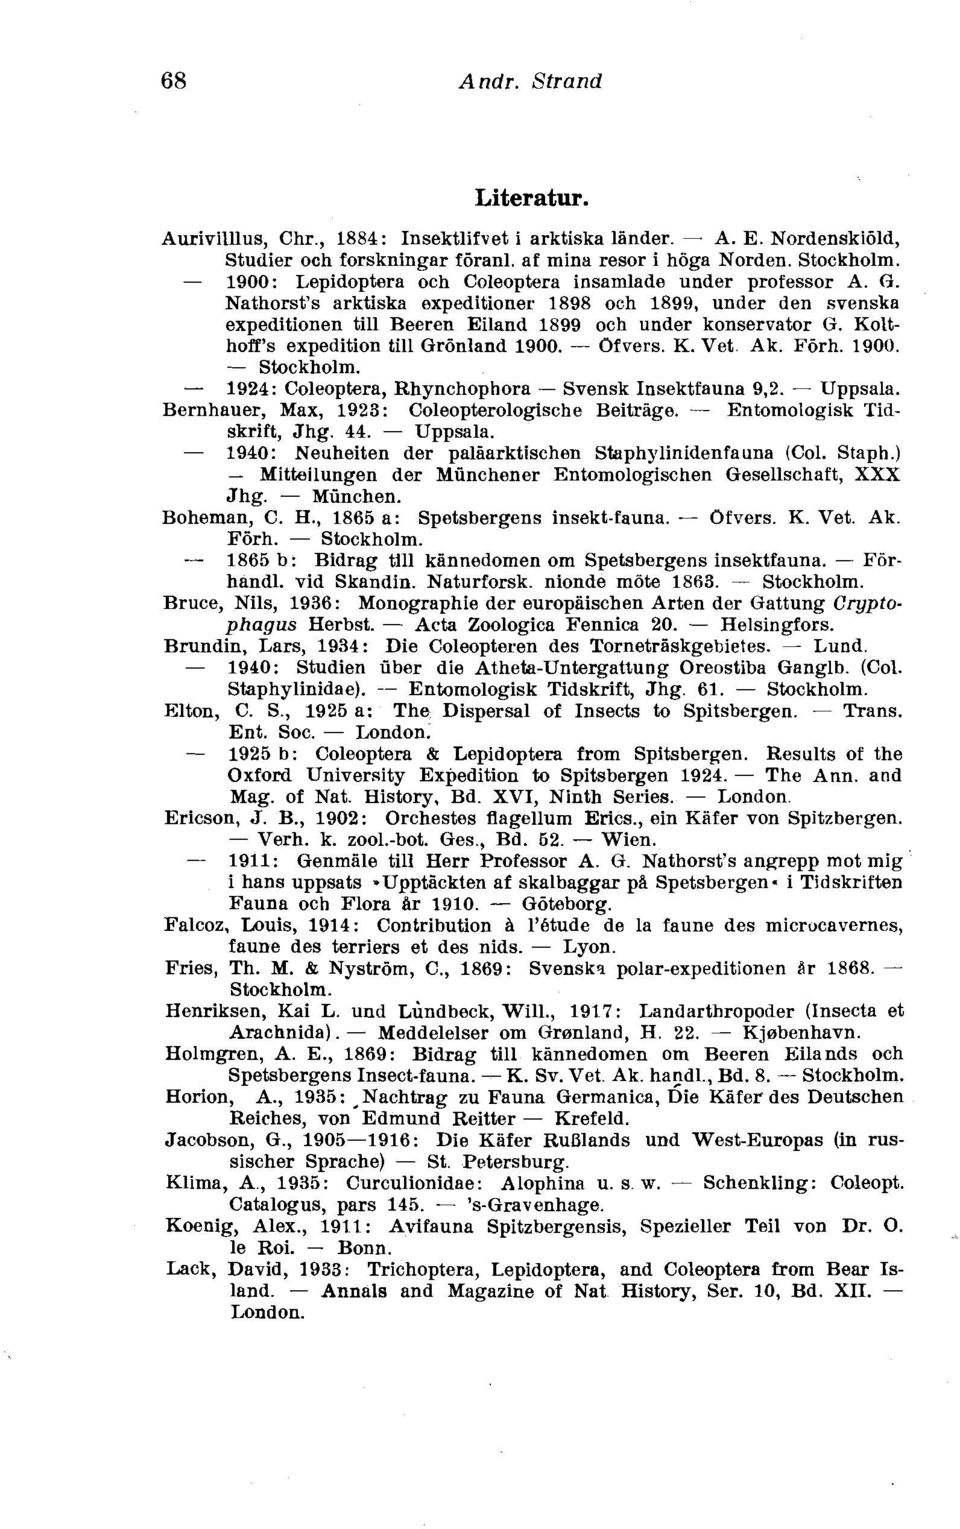 Kolthoff's expedition till Grdnland 19. - Ofvers. K. Vet Ak. Fbrh. 19. - Stockholm. - 1924: Coleoptera, Rhynchophora - Svensk Insektfauna 9,2. - Uppsala.